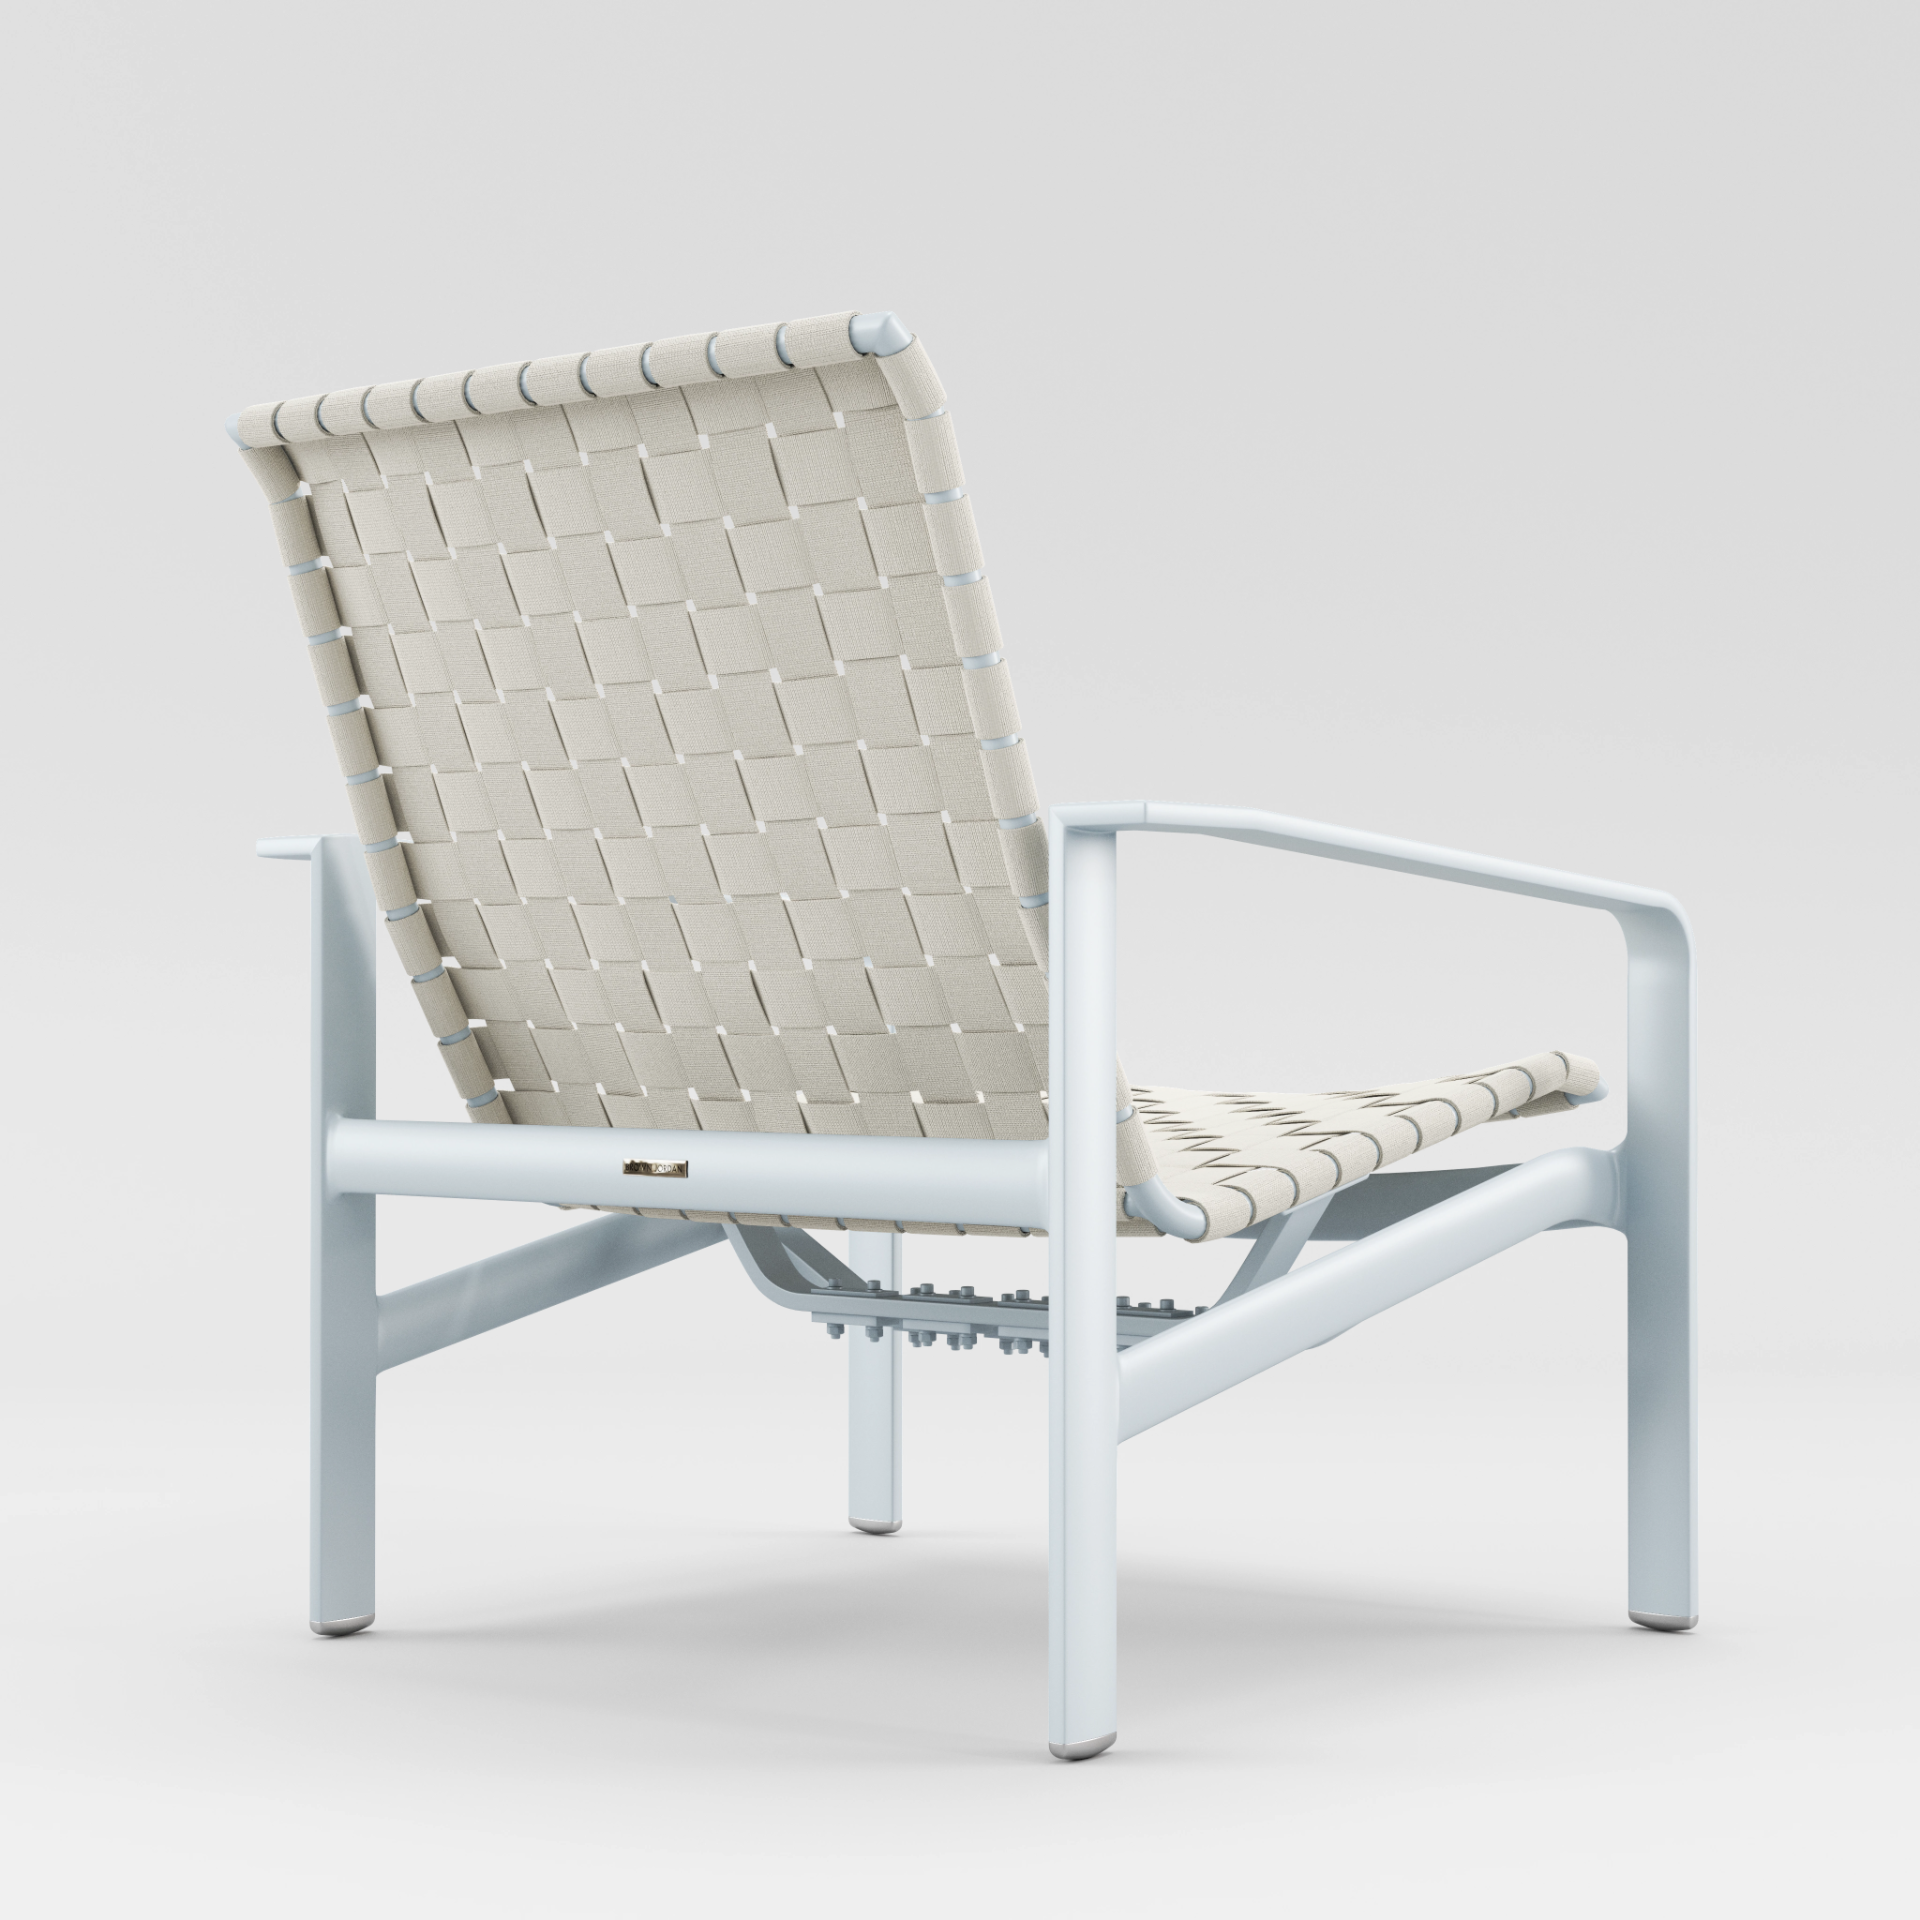 Softscape Strap Motion Lounge Chair by Brown Jordan